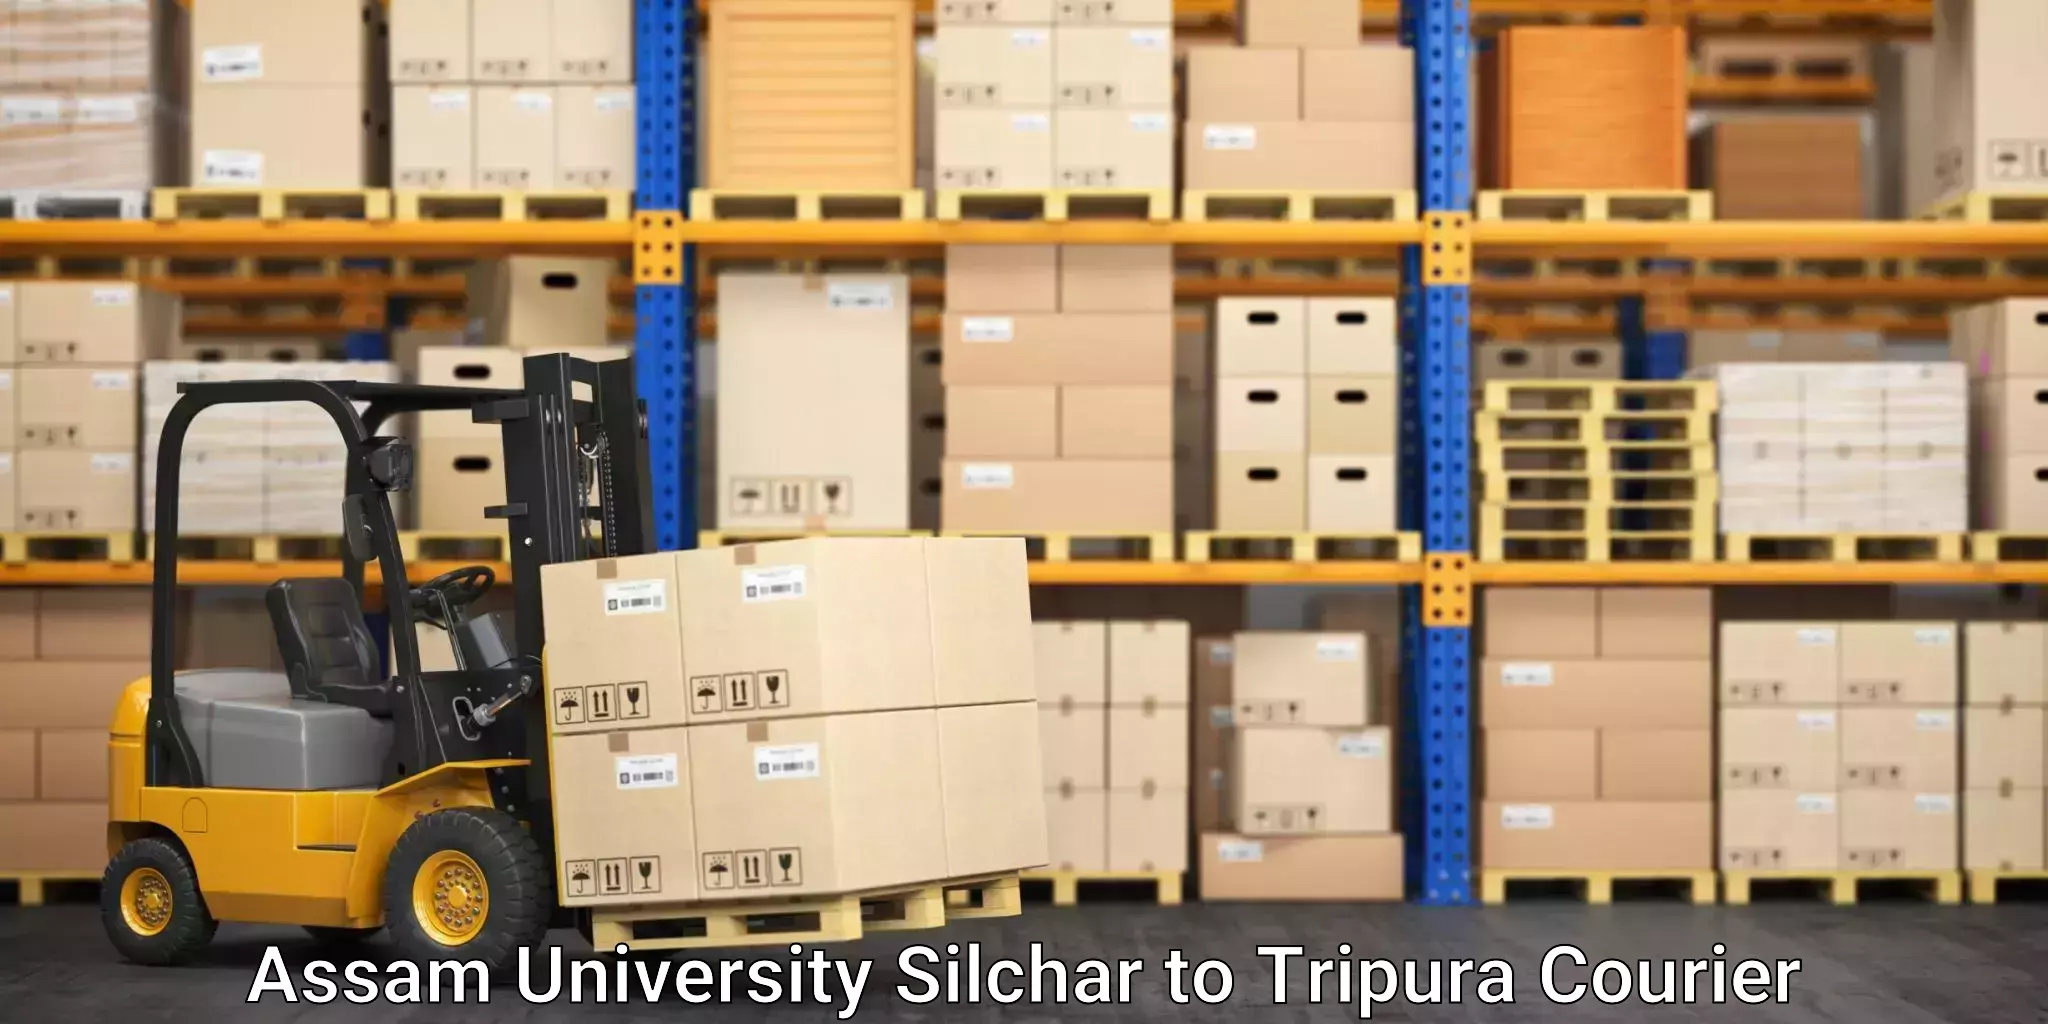 Multi-modal transport Assam University Silchar to Agartala